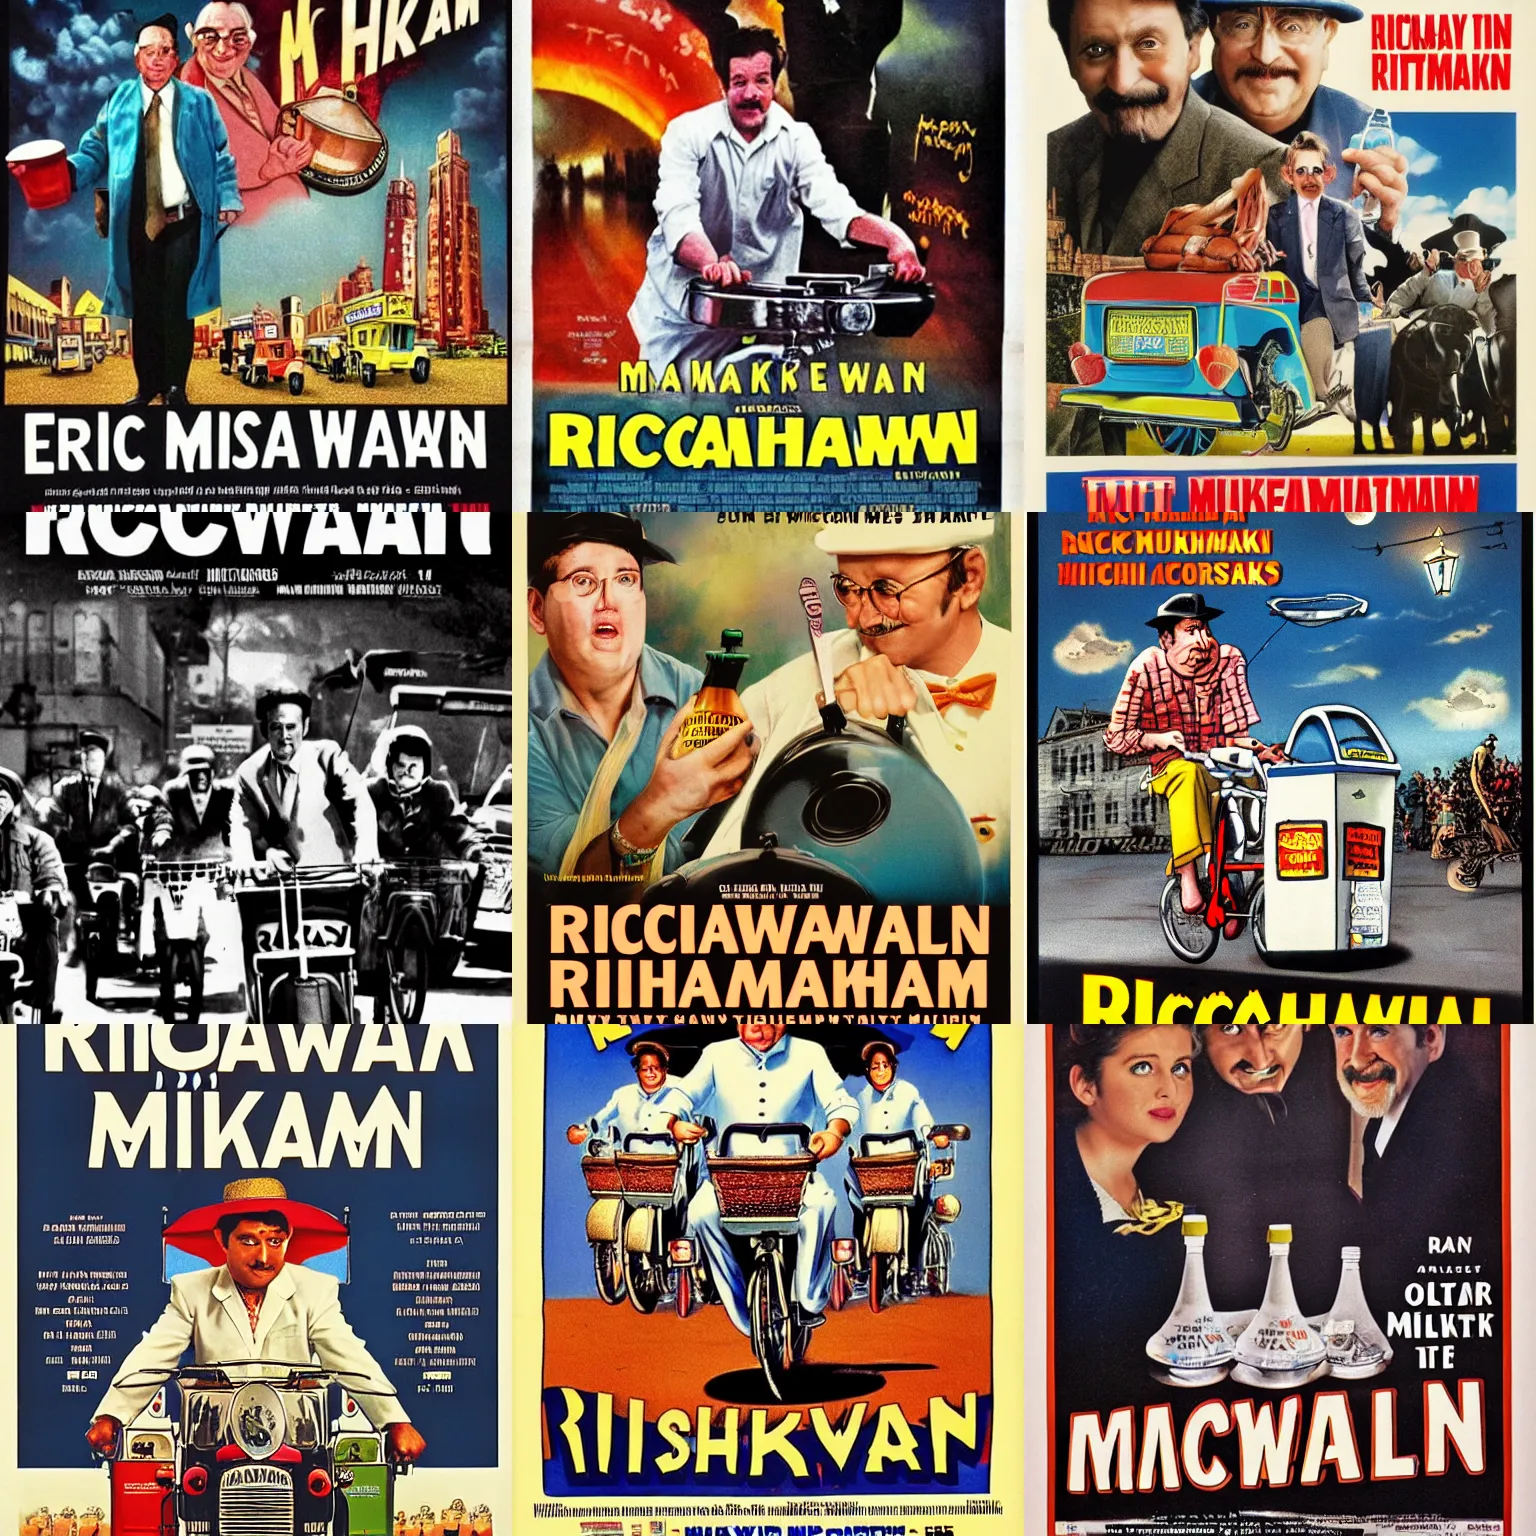 Prompt: Movie Poster for The Rickshaw Milkman Returns (1990)